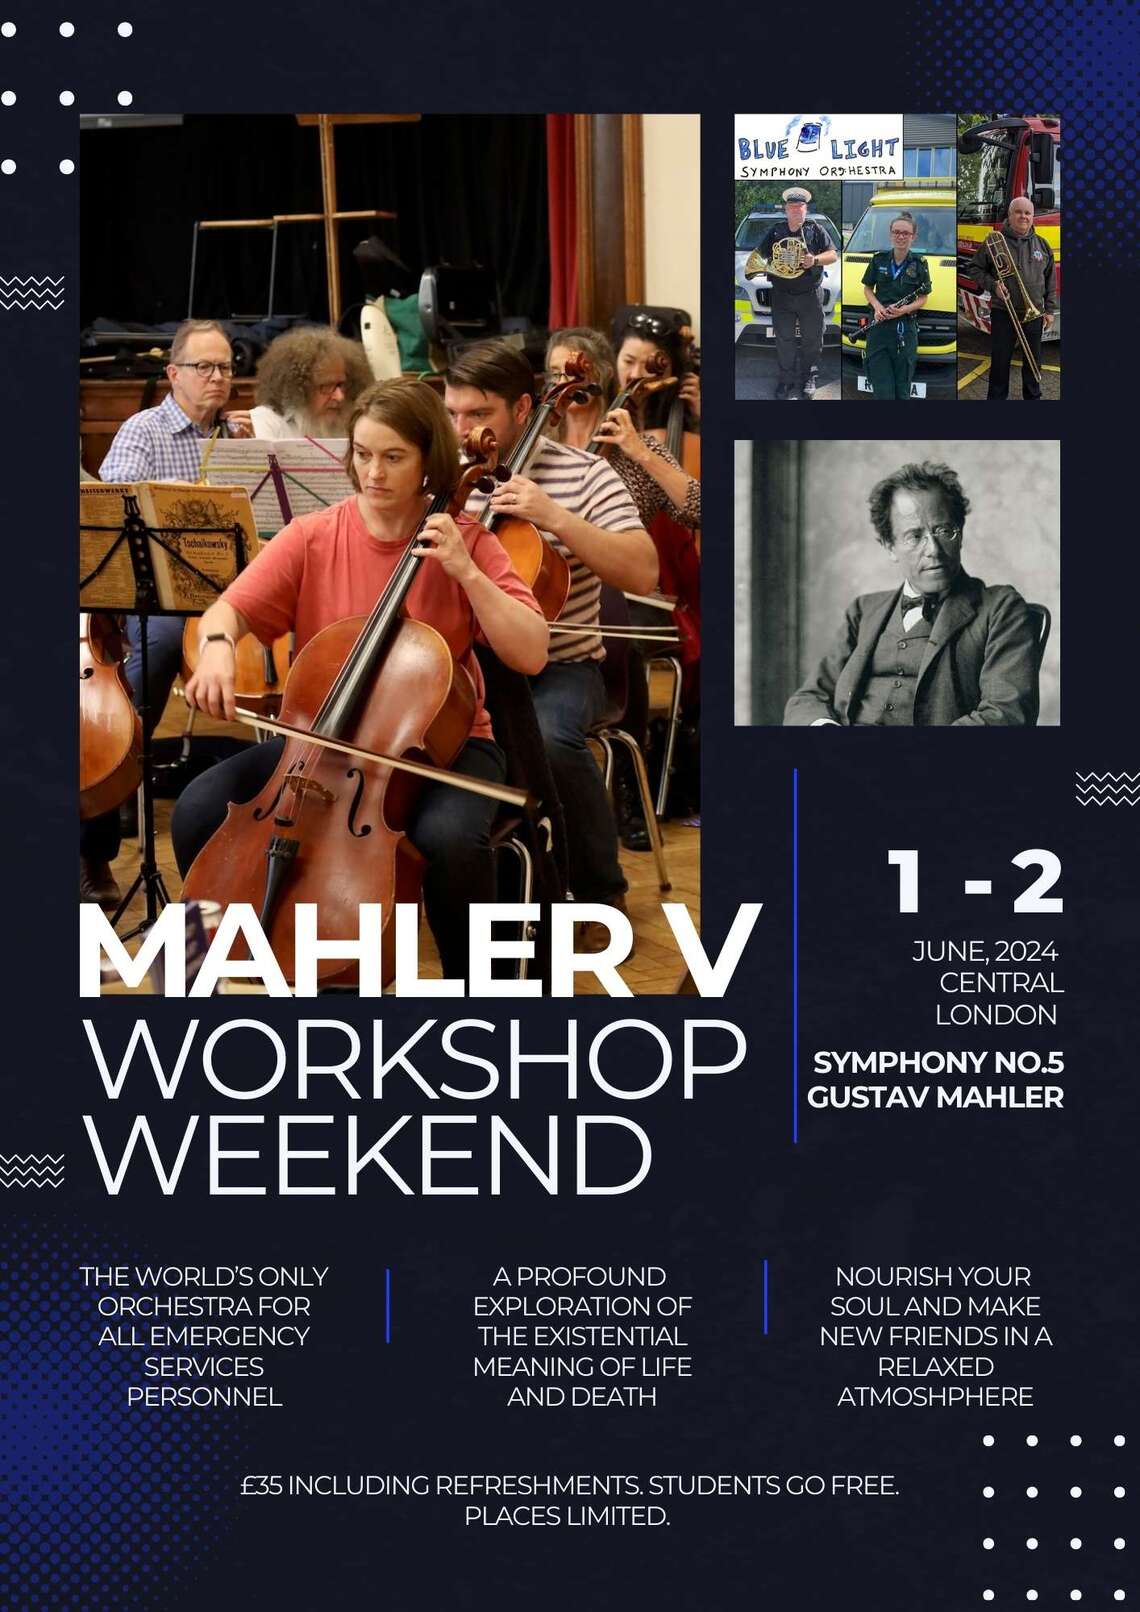 Mahler weekend flyer